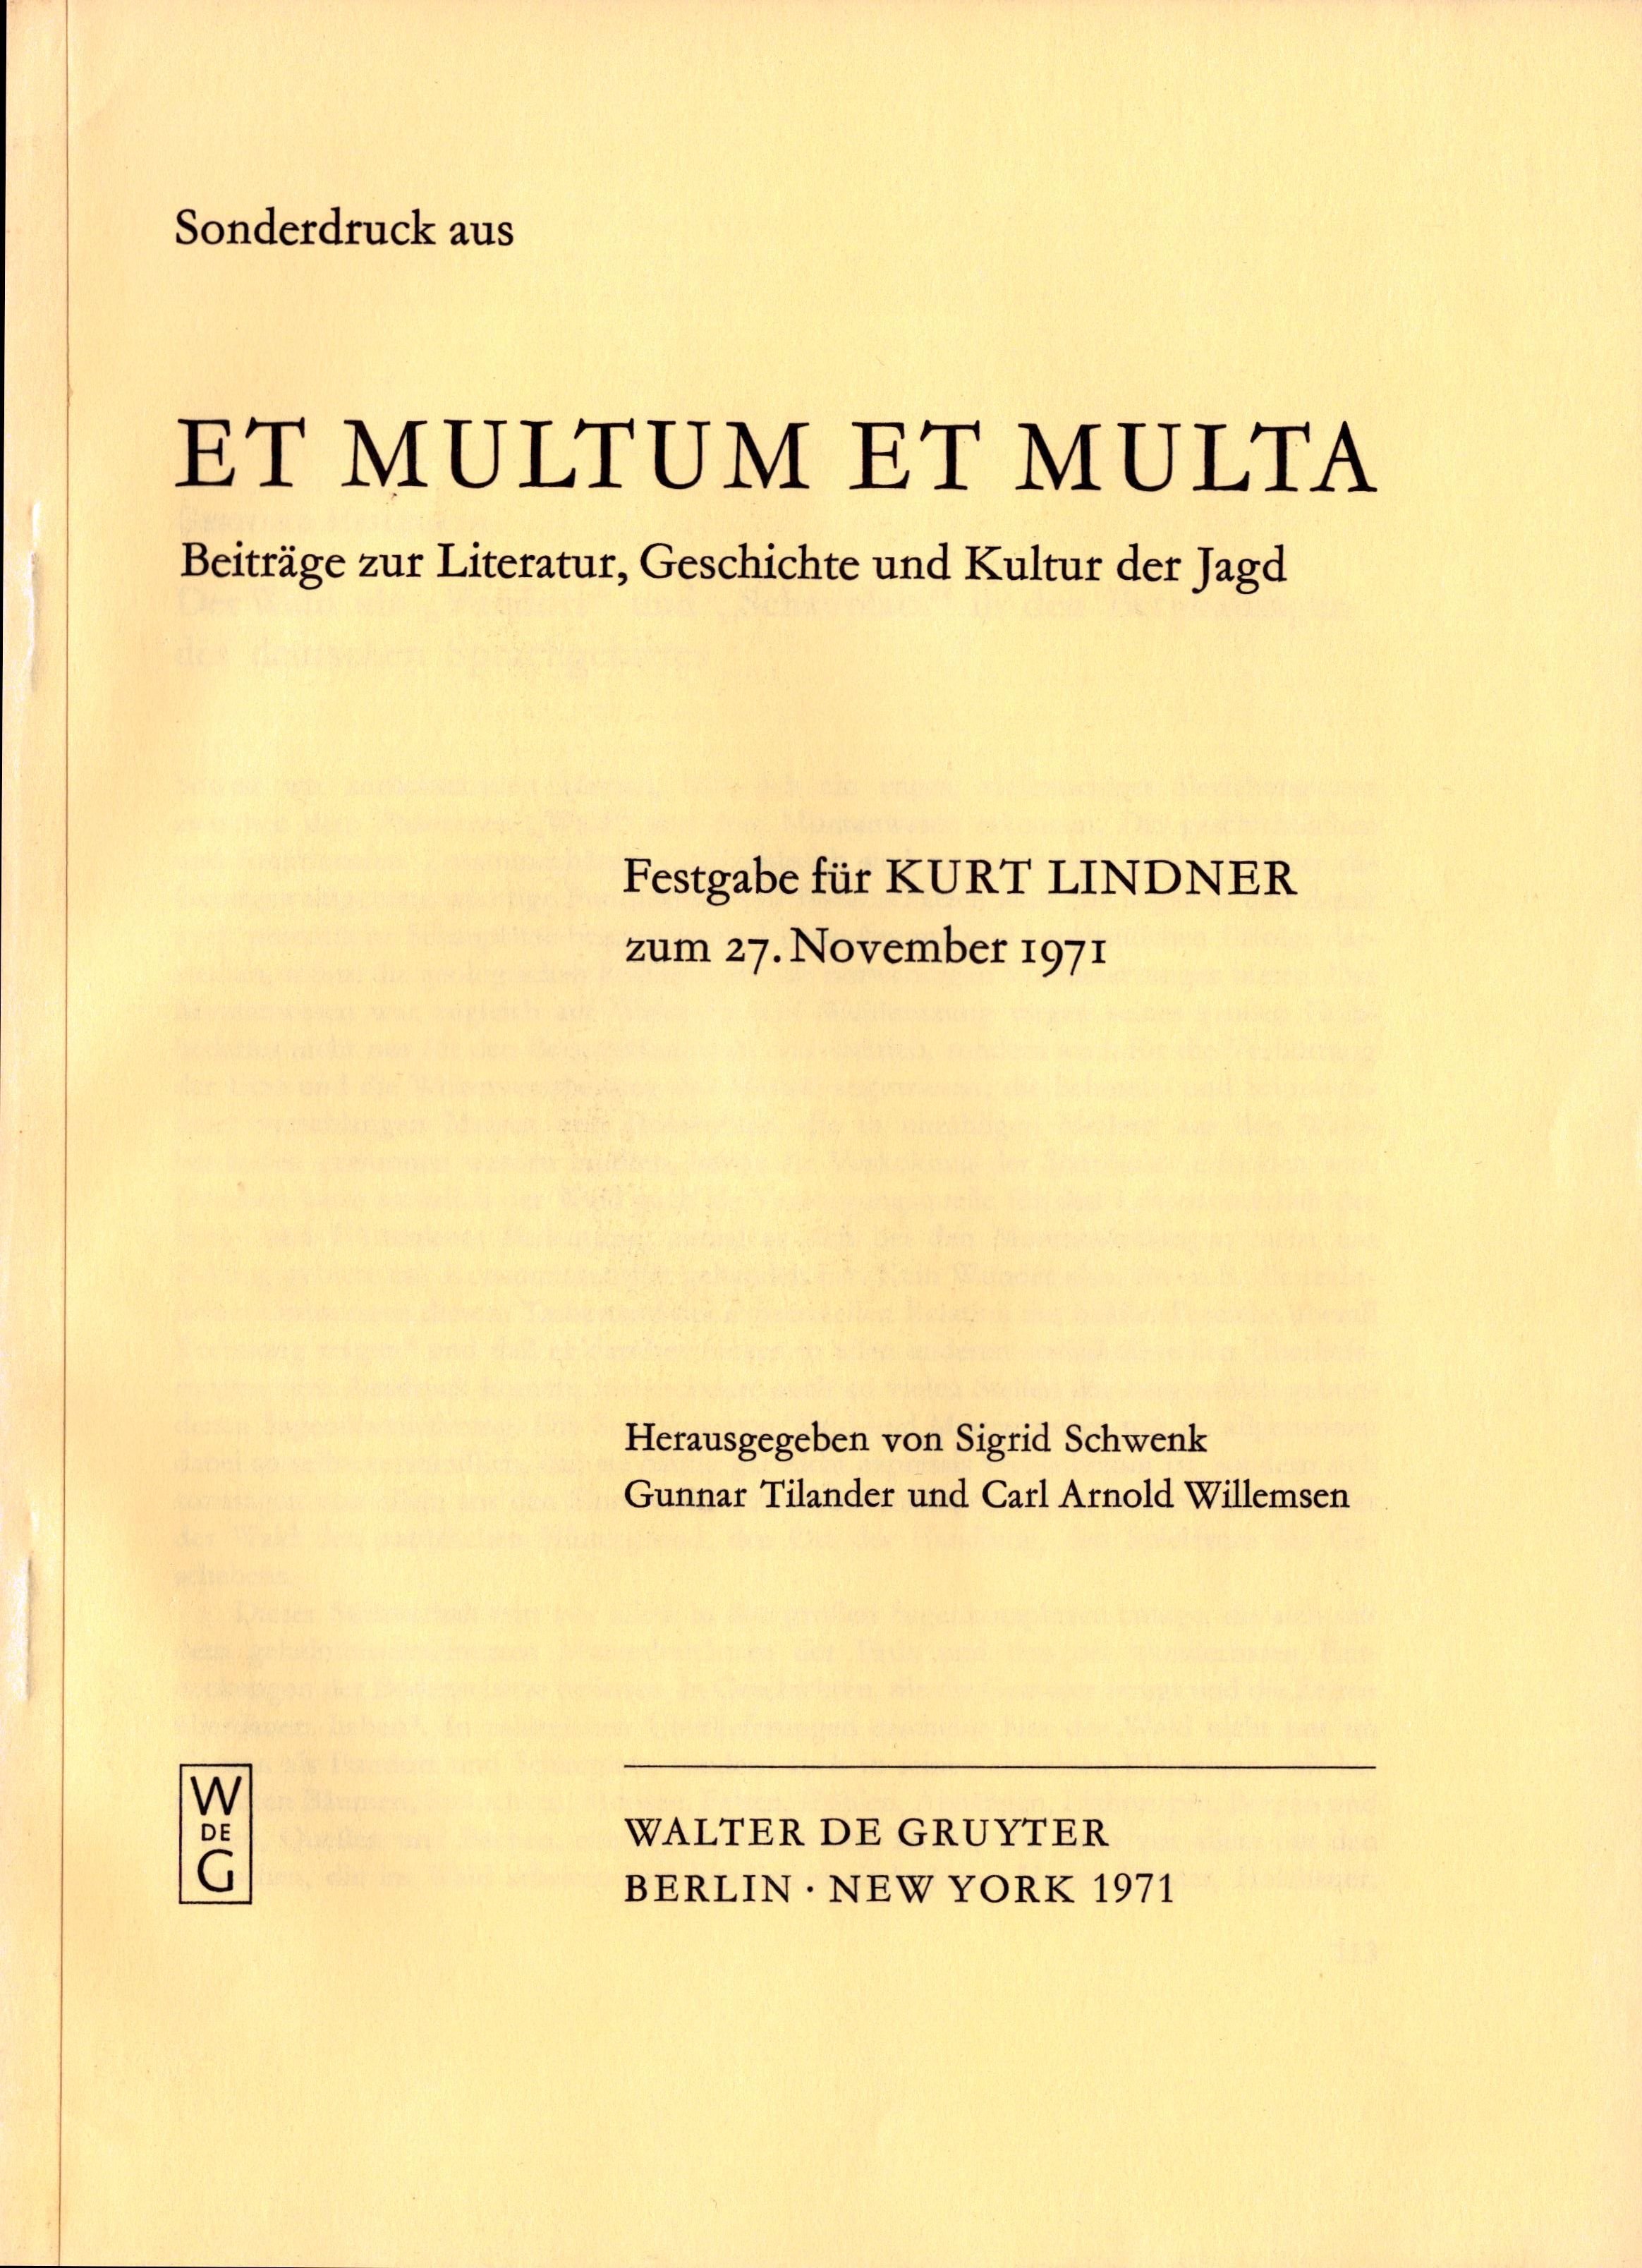 Sonderdruck aus ET MULTUM ET MULTA (Archiv SAXONIA-FREIBERG-STIFTUNG CC BY-NC-SA)